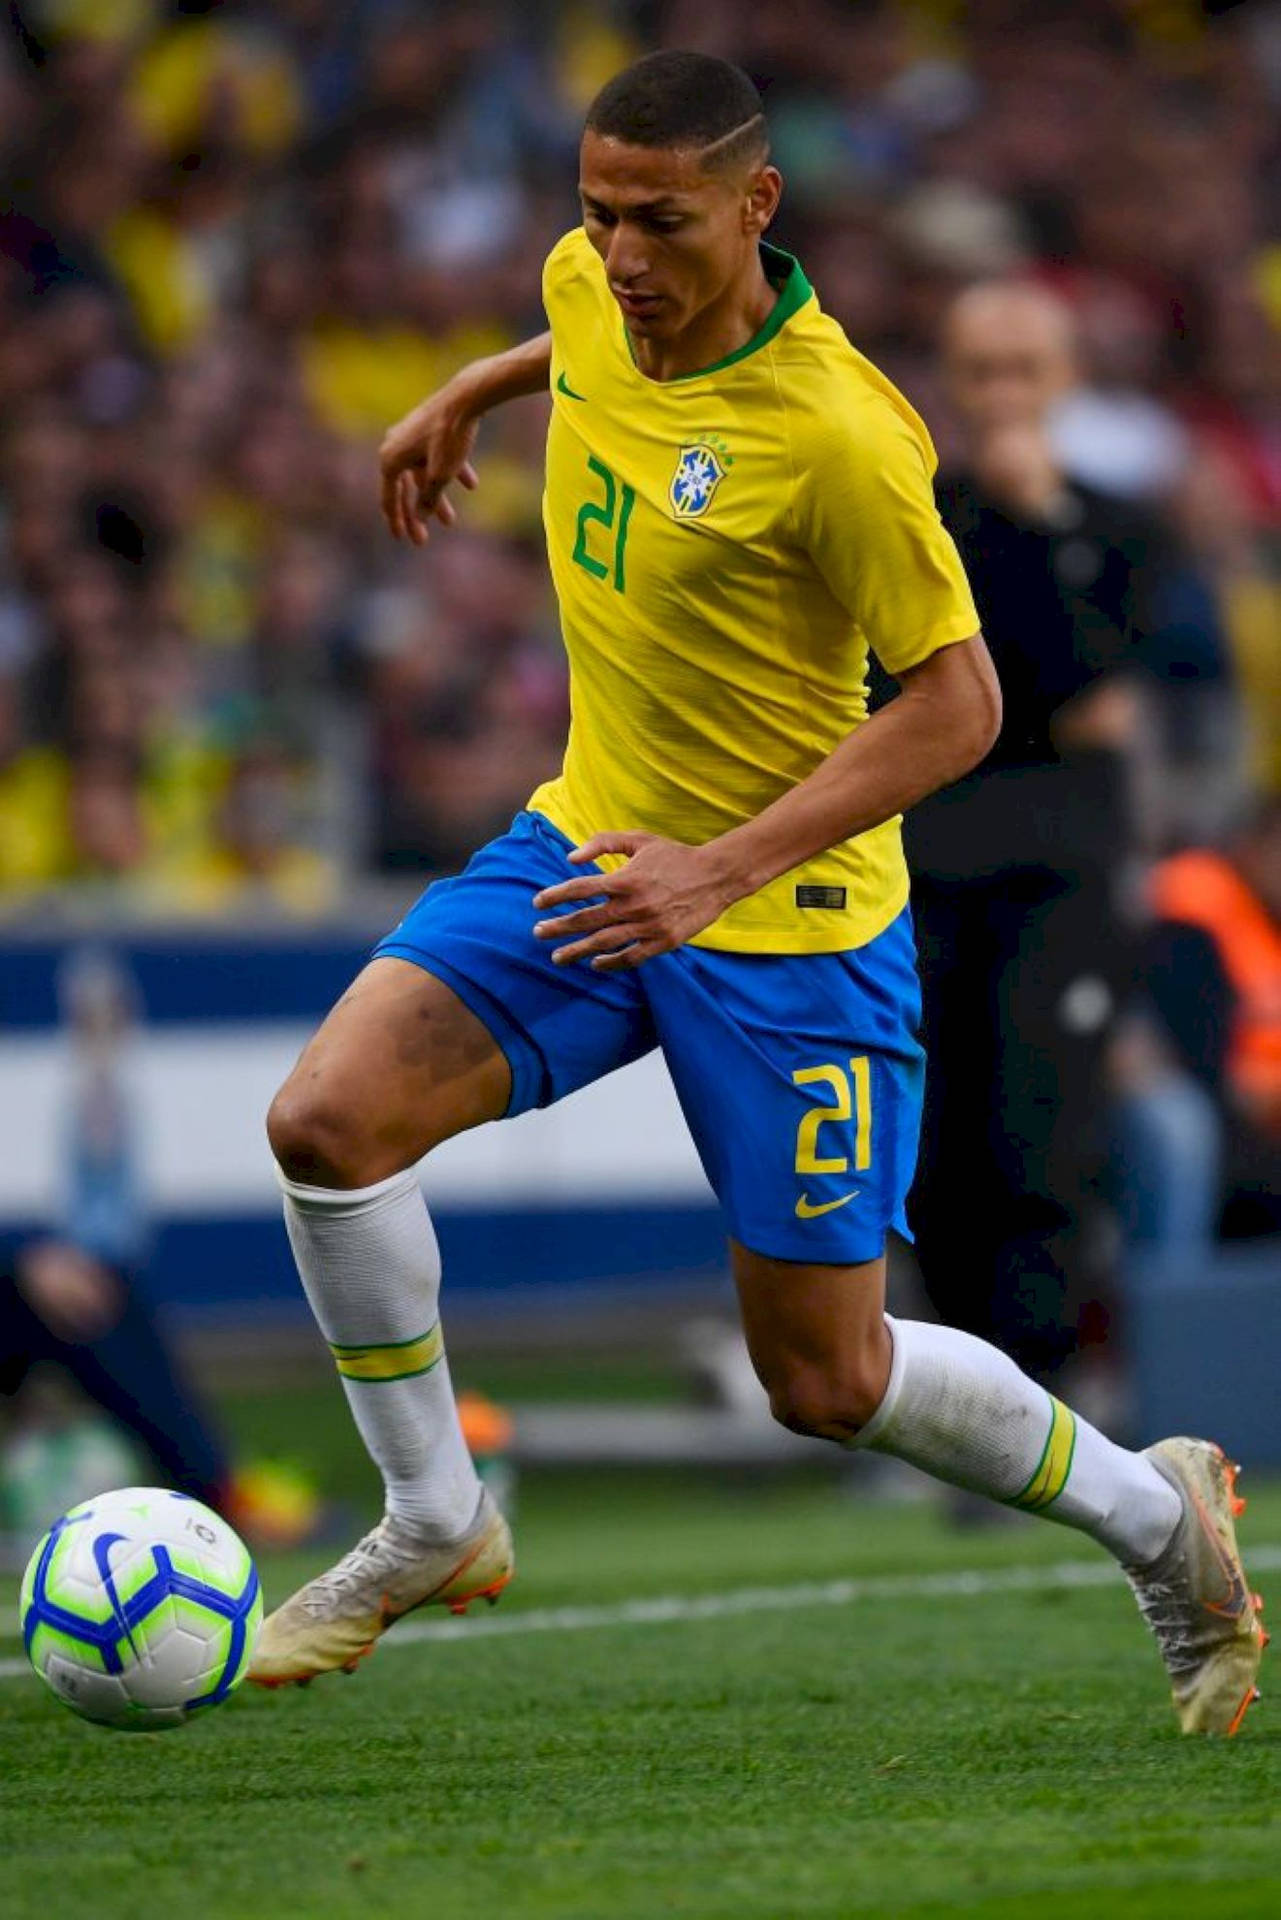 Richarlison De Andrade skillfully dribbling a football during a match Wallpaper